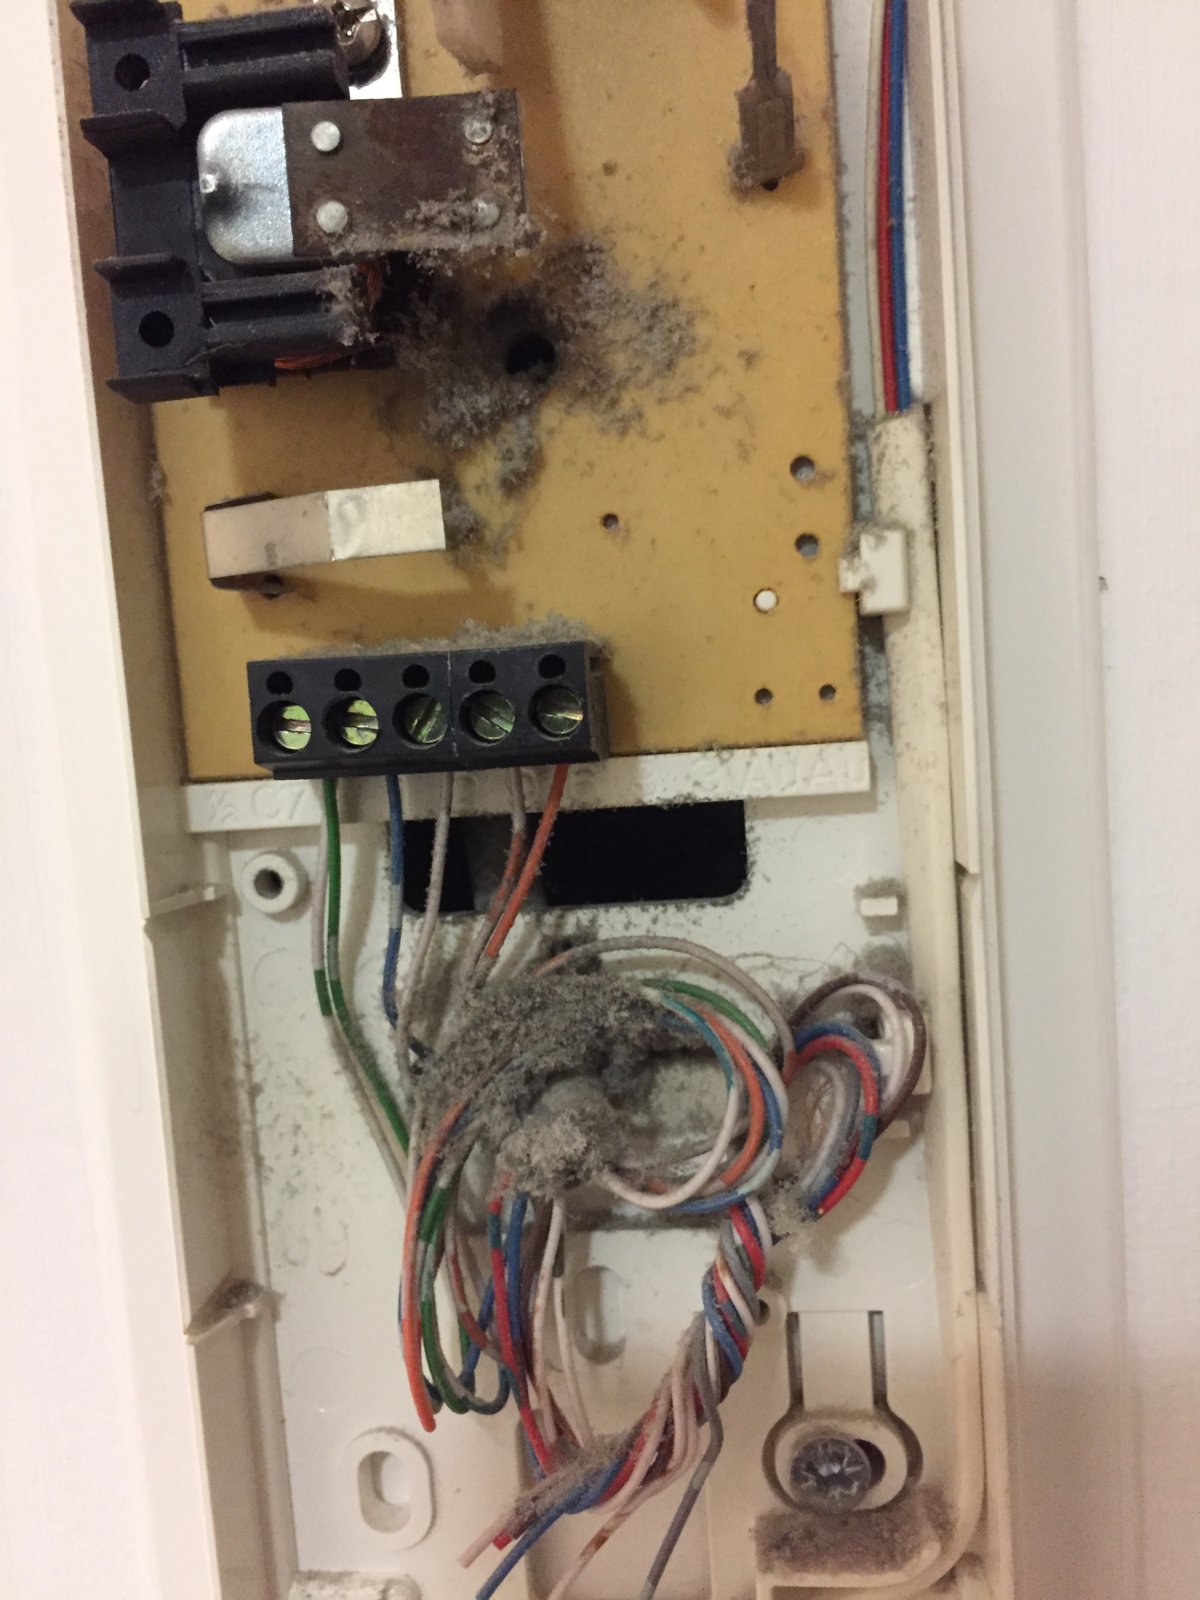 Intercom door entry system wiring | DIYnot Forums